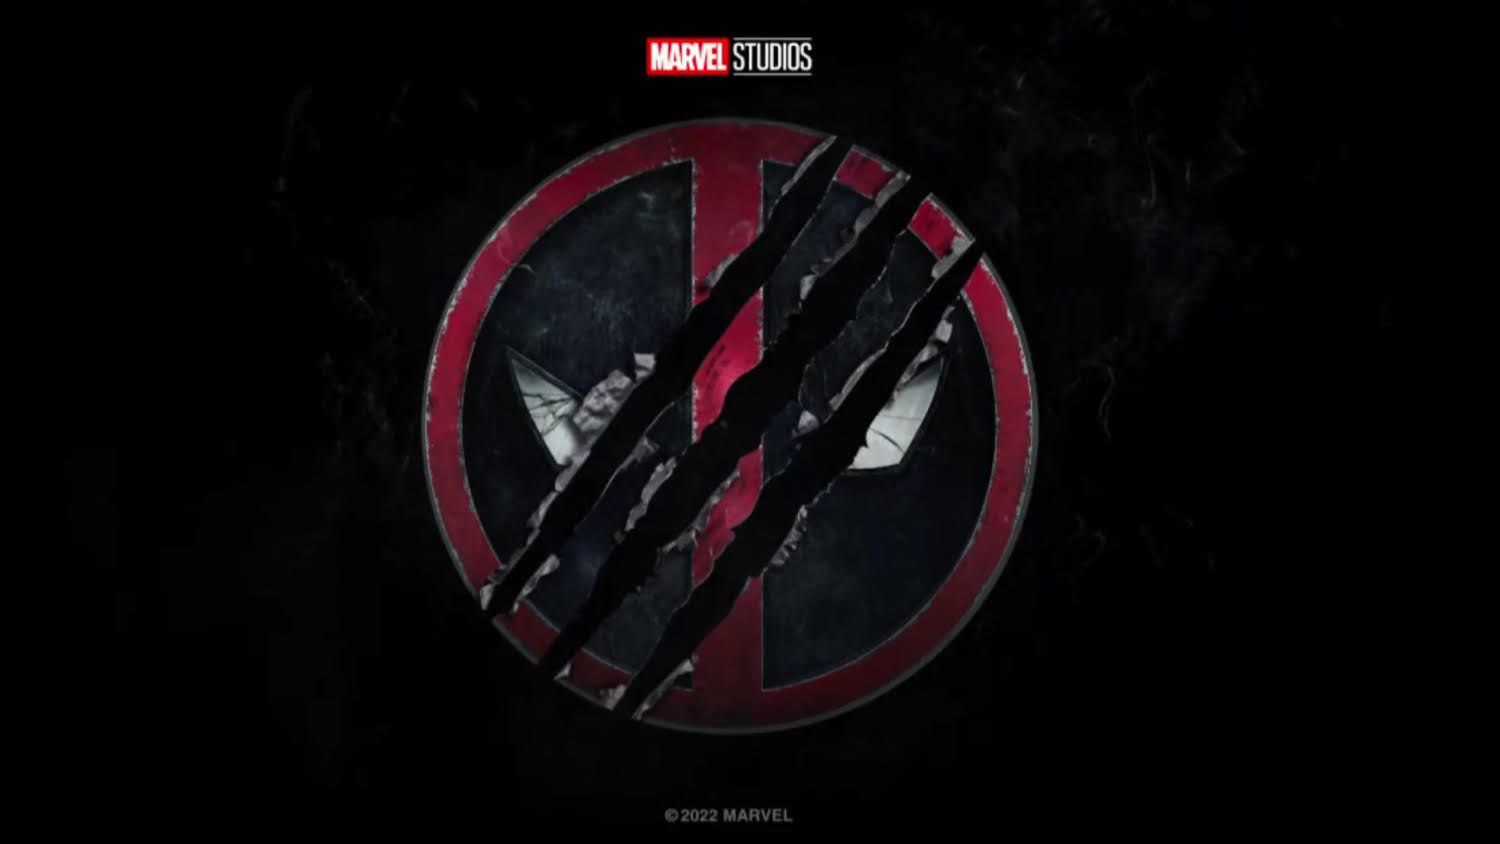 Hugh Jackman will return as Wolverine in Marvel Studios' Deadpool 3.